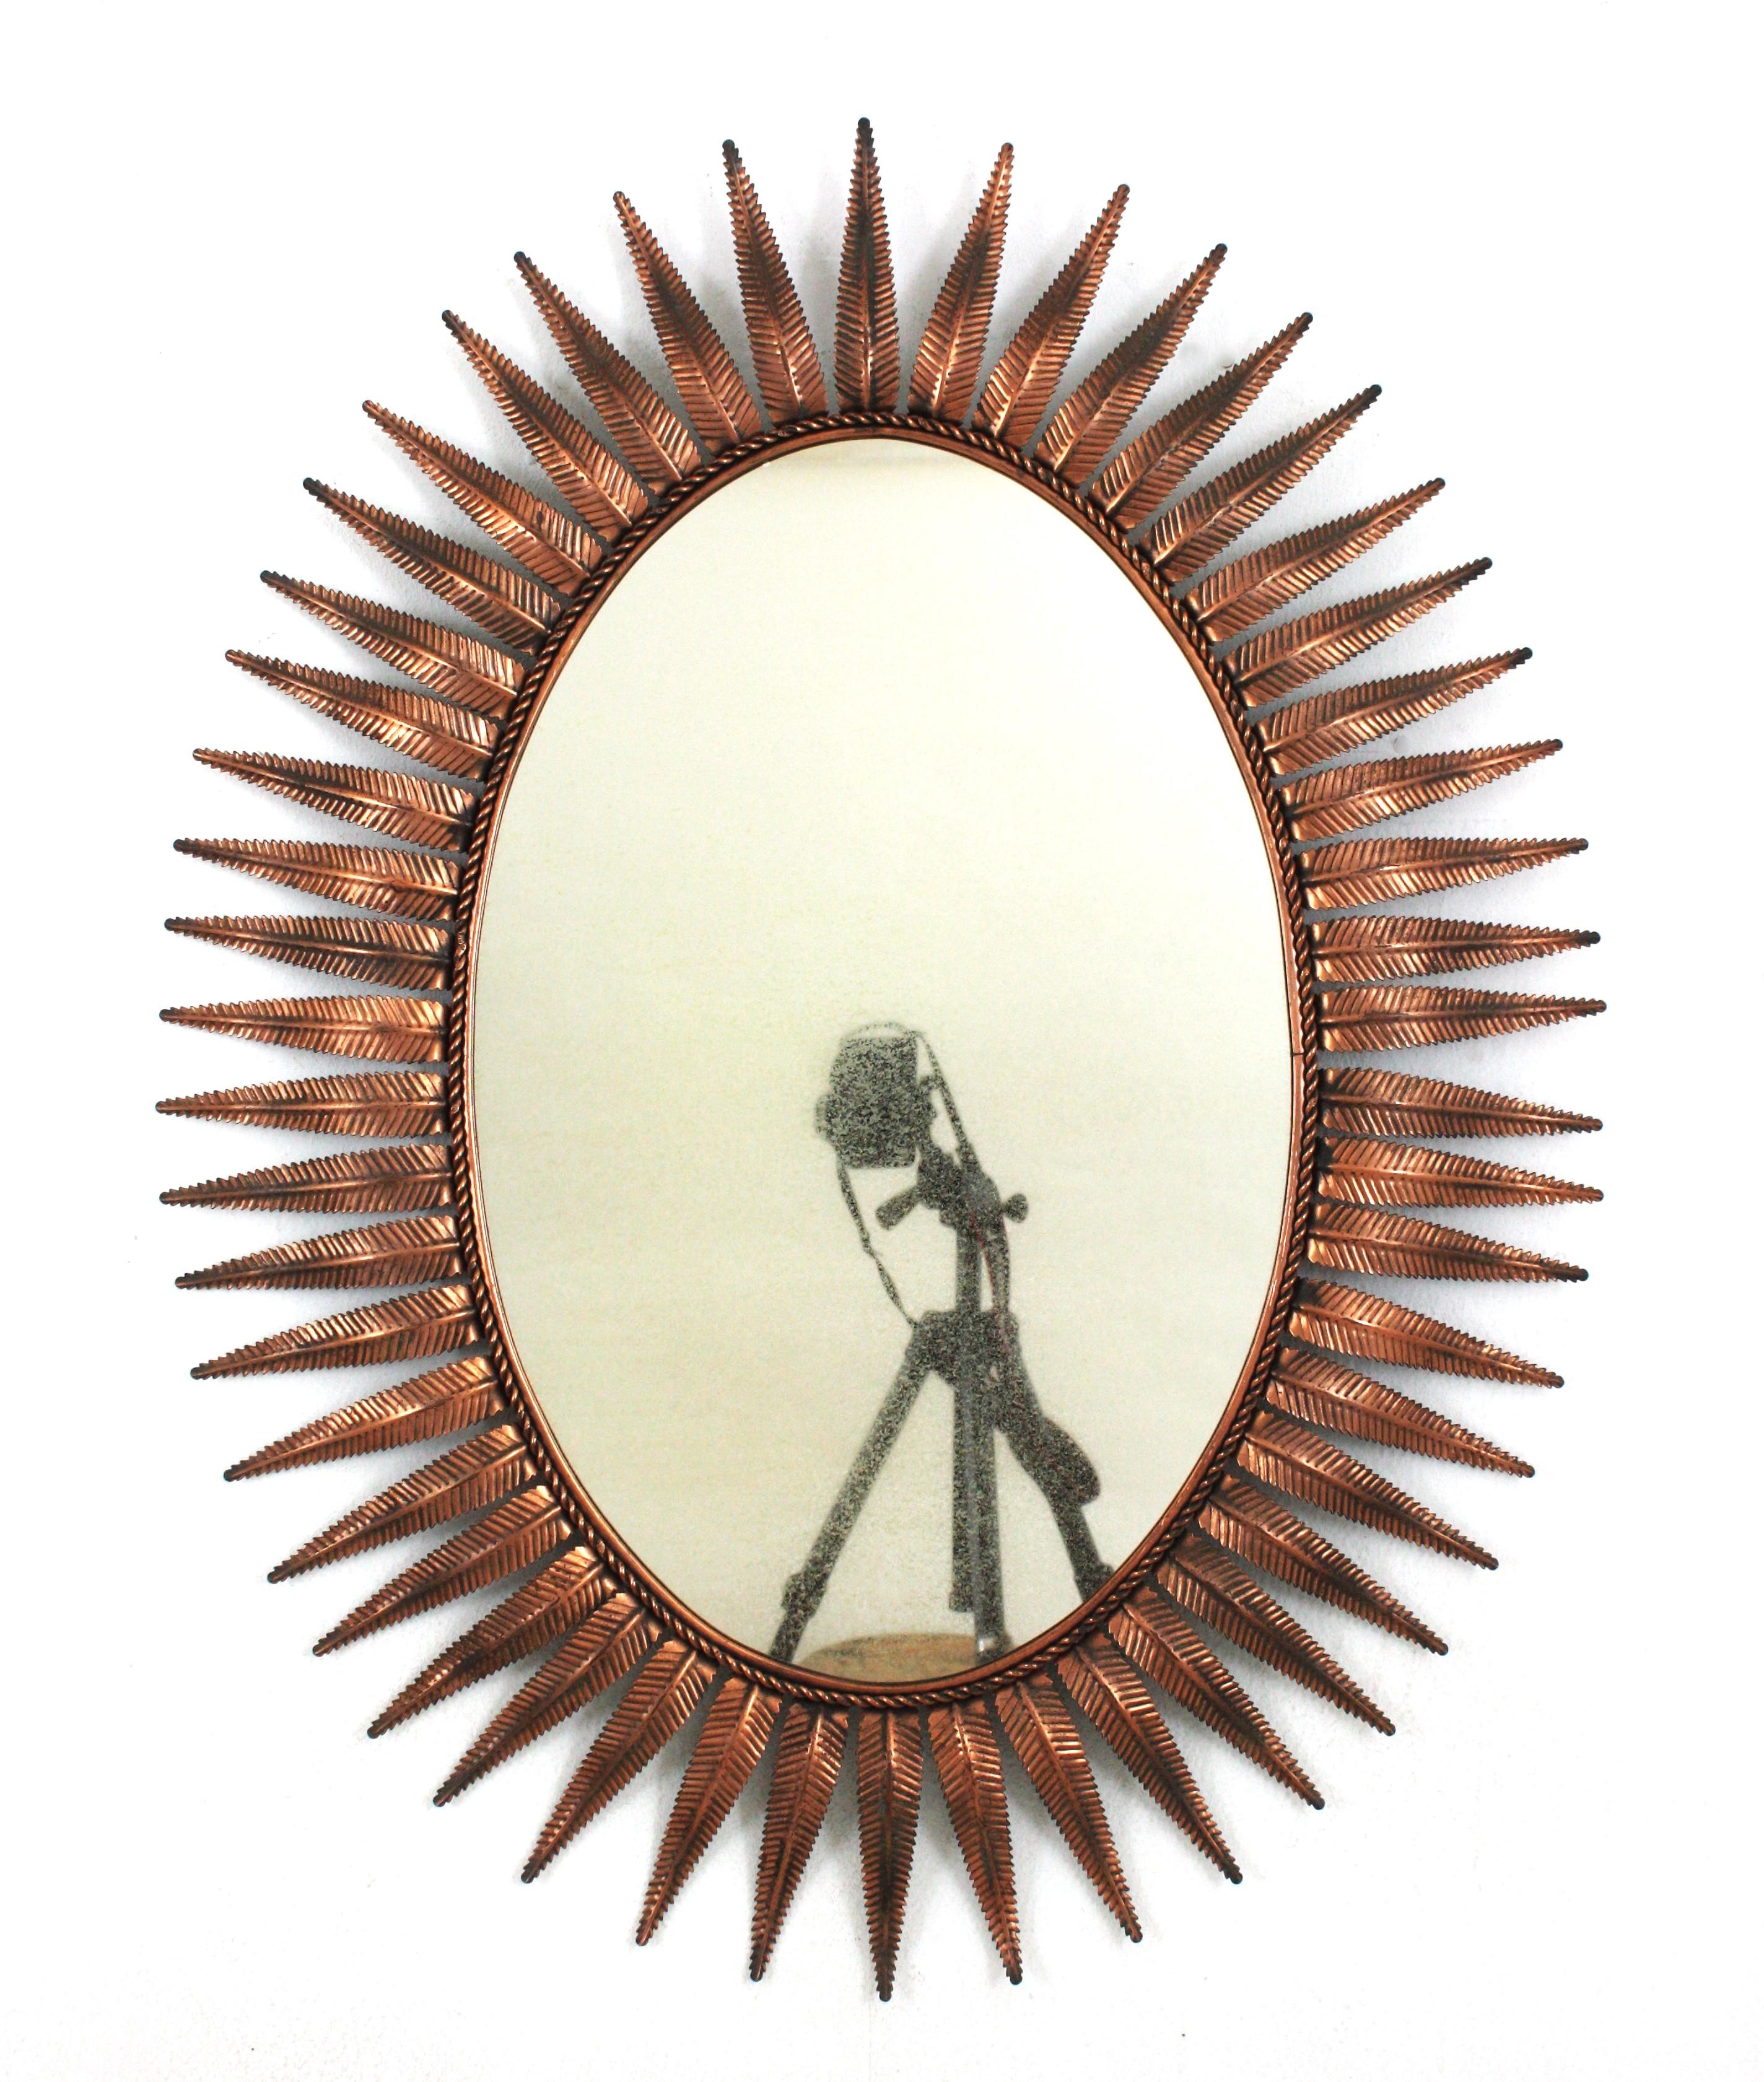 Spanish Sunburst Oval Mirror in Copper Metal, 1950s For Sale 4